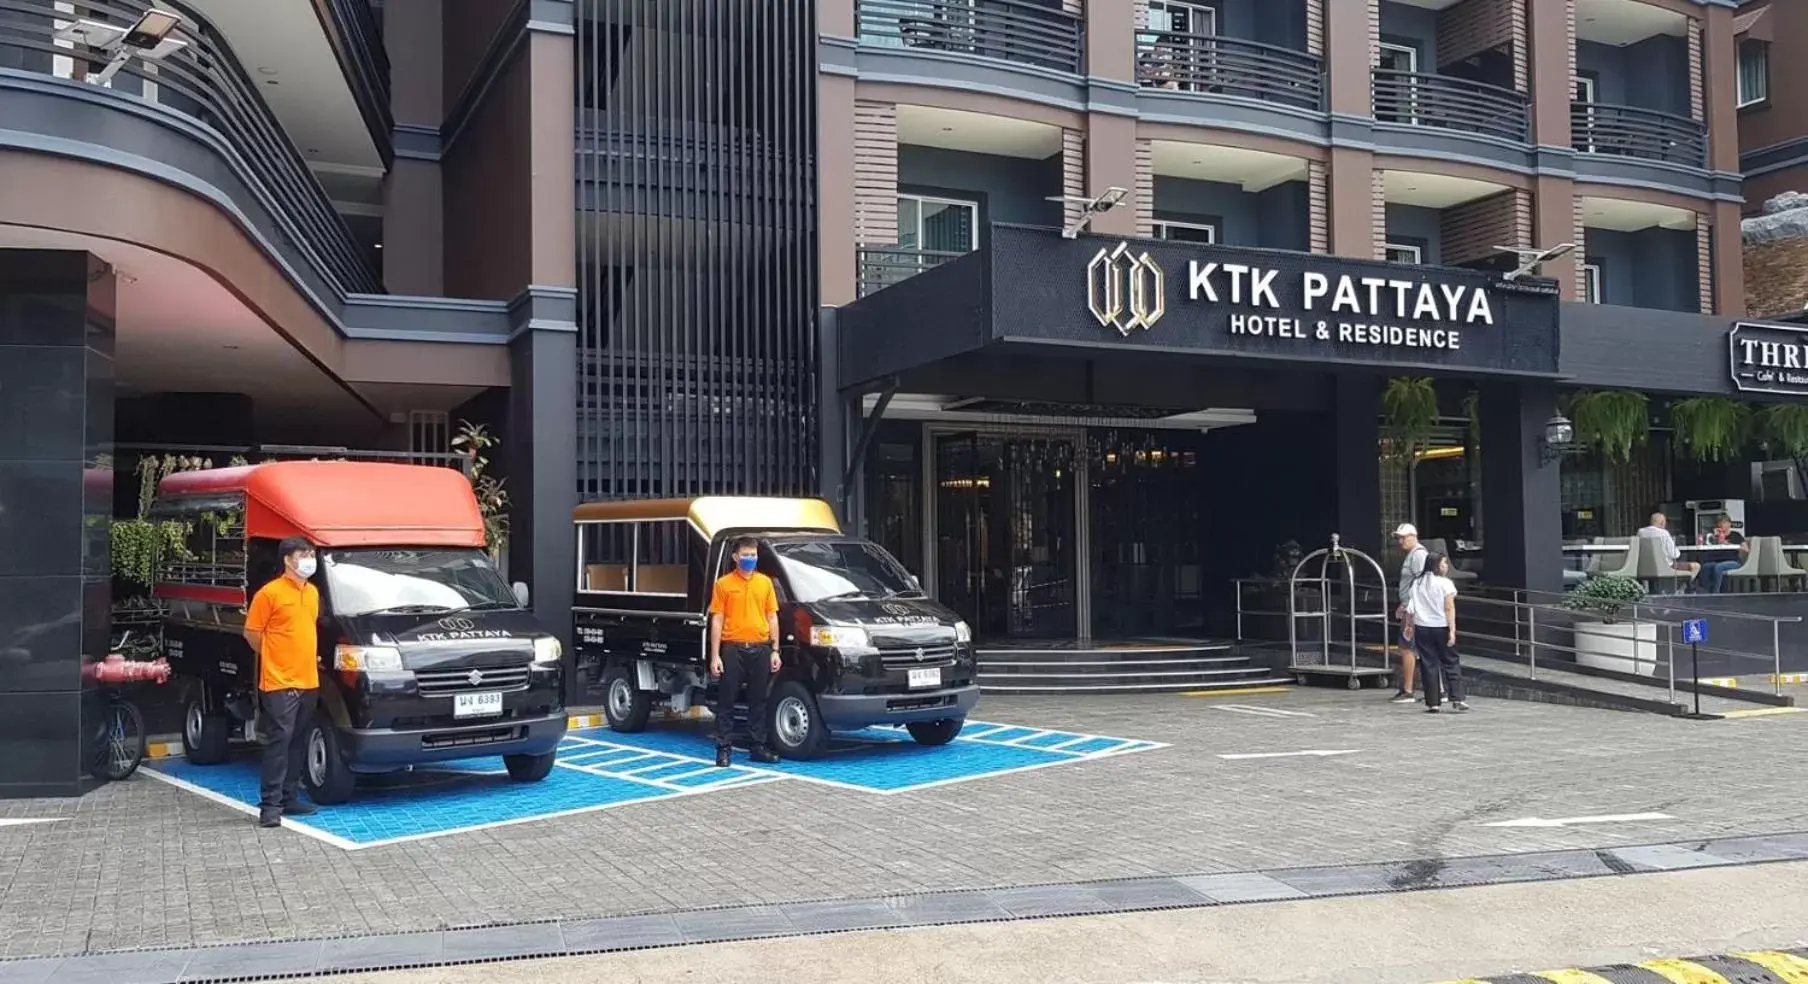 Street view in KTK Pattaya Hotel & Residence